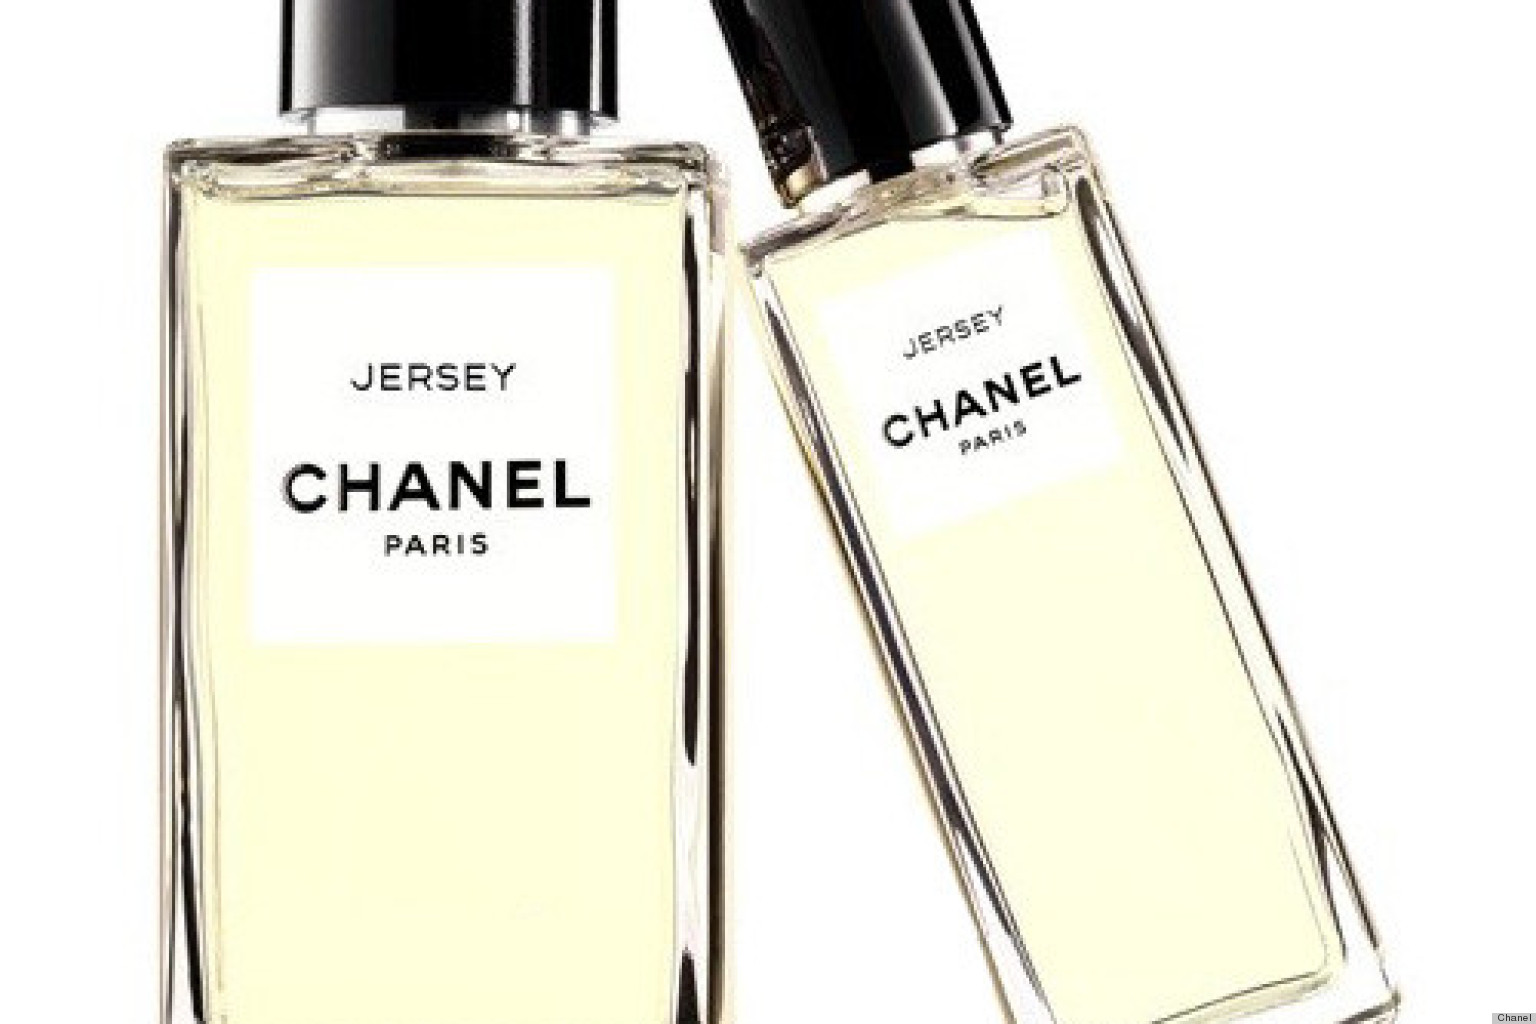 Les exclusifs de Chanel Jersey Шанель